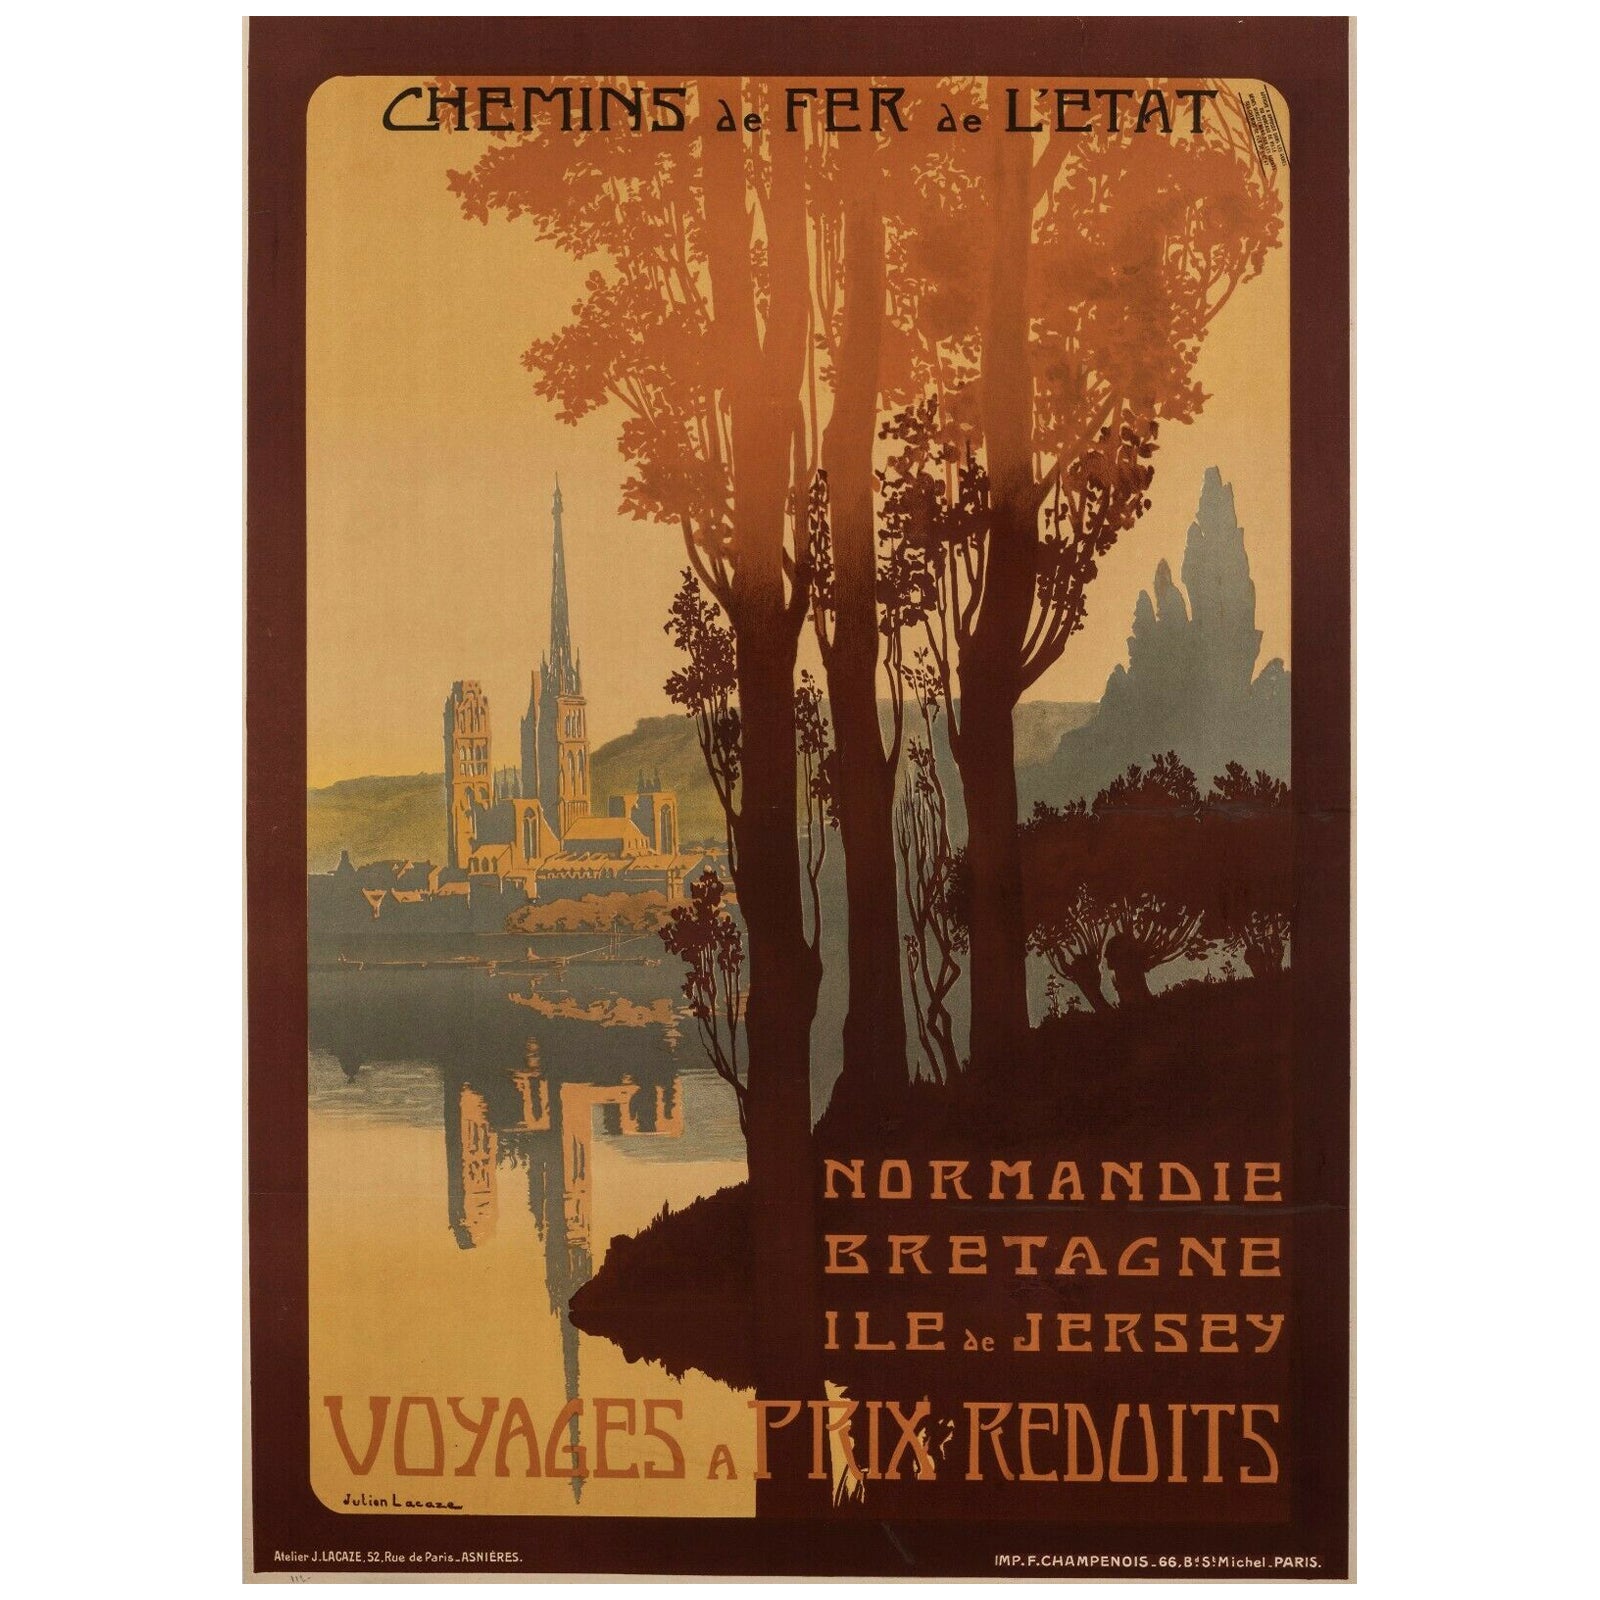 Original Vintage Travel Poster-J. Lacaze-Normandie-Bretagne-Jersey, c.1910 For Sale